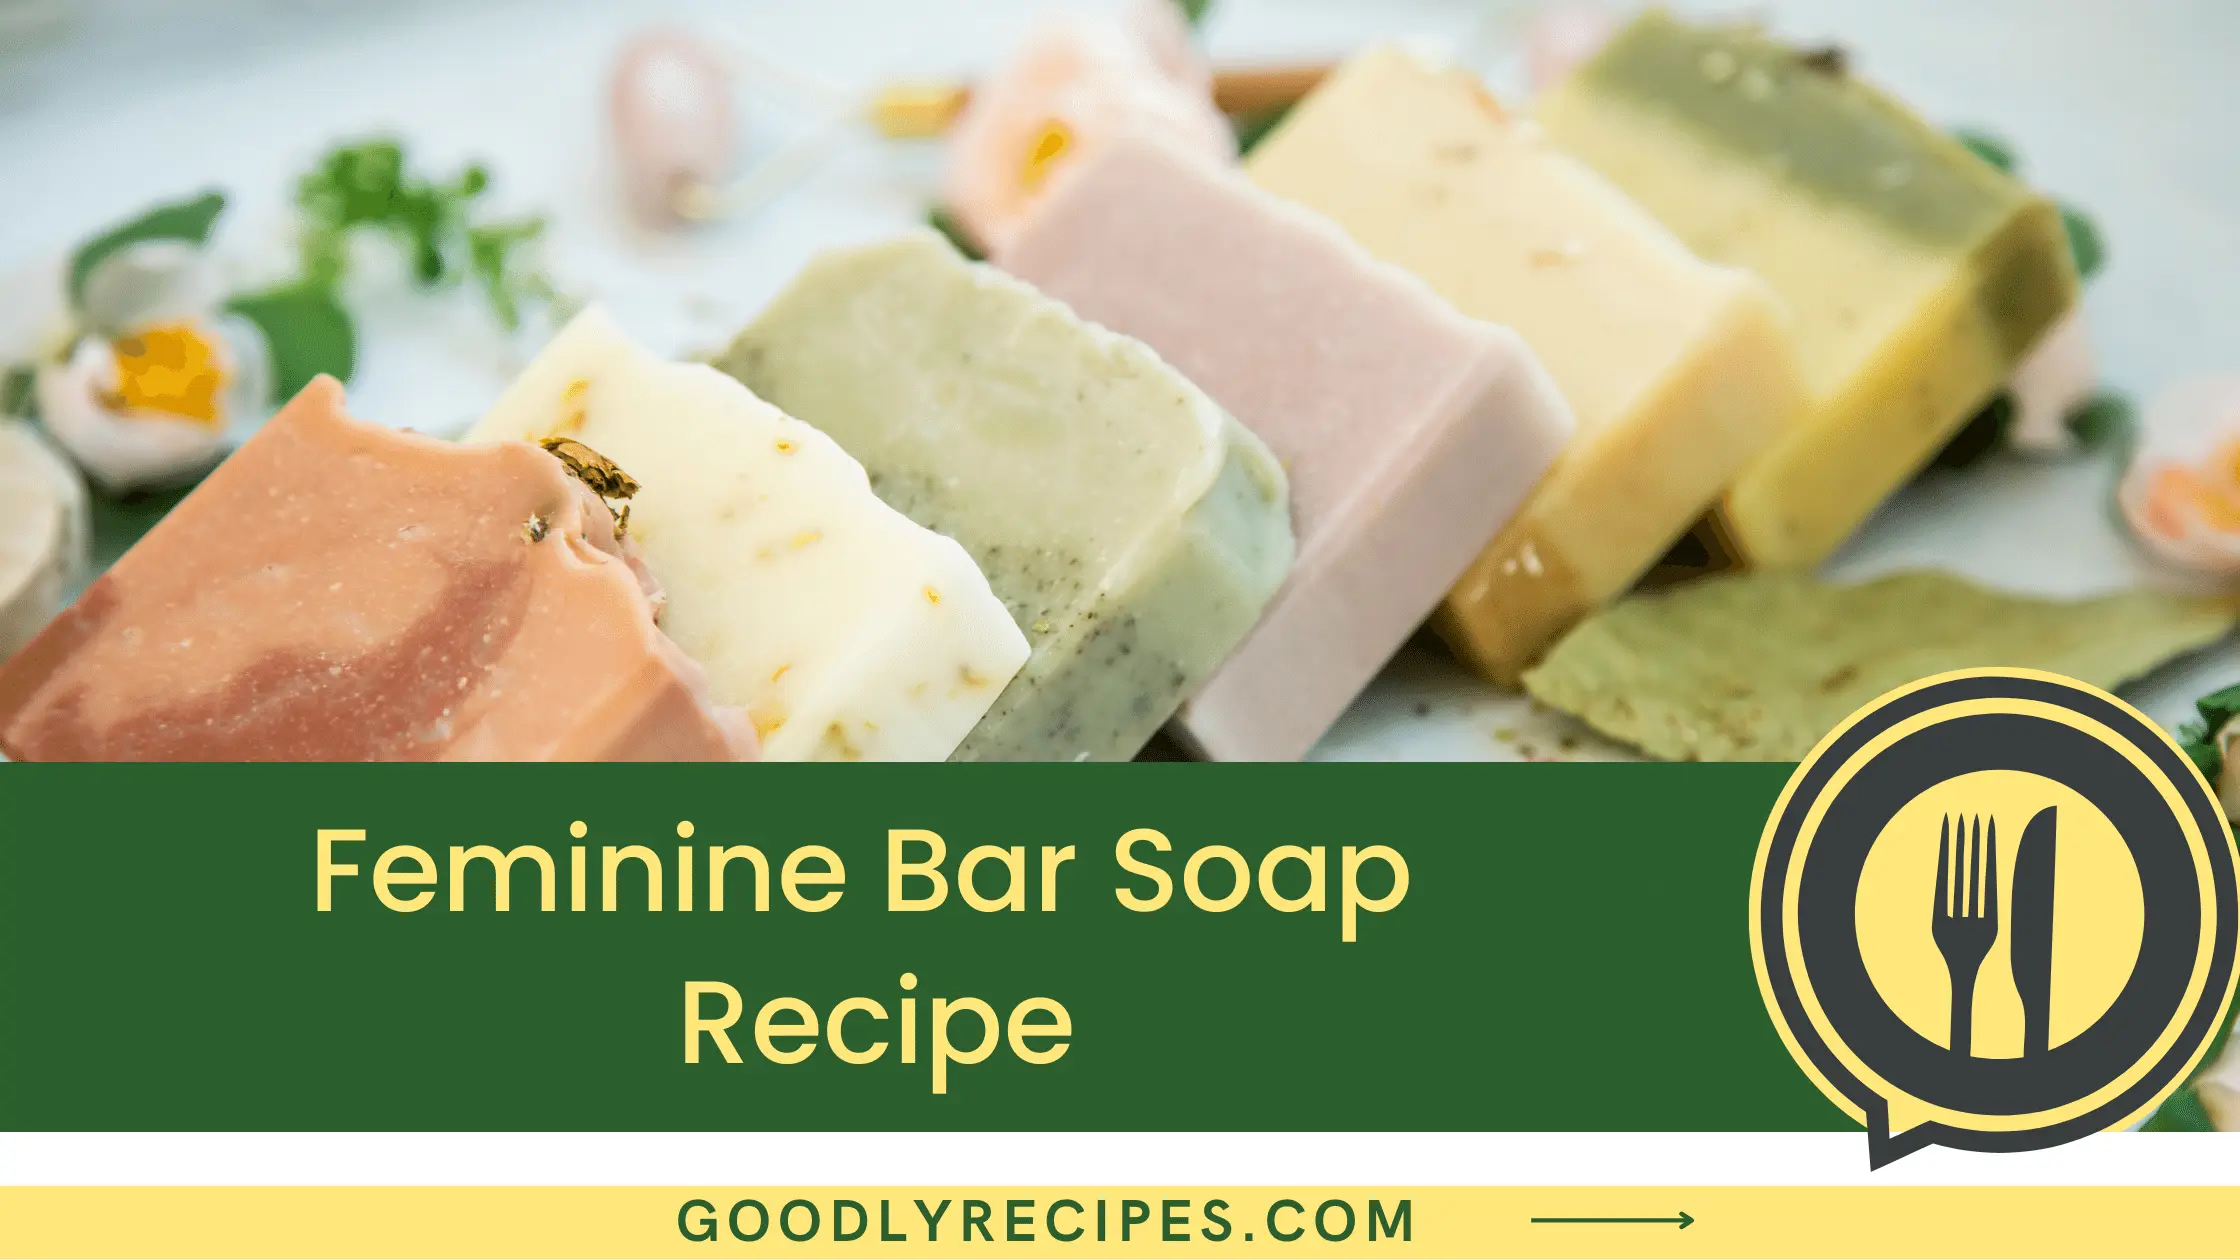 What is Feminine Bar Soap?